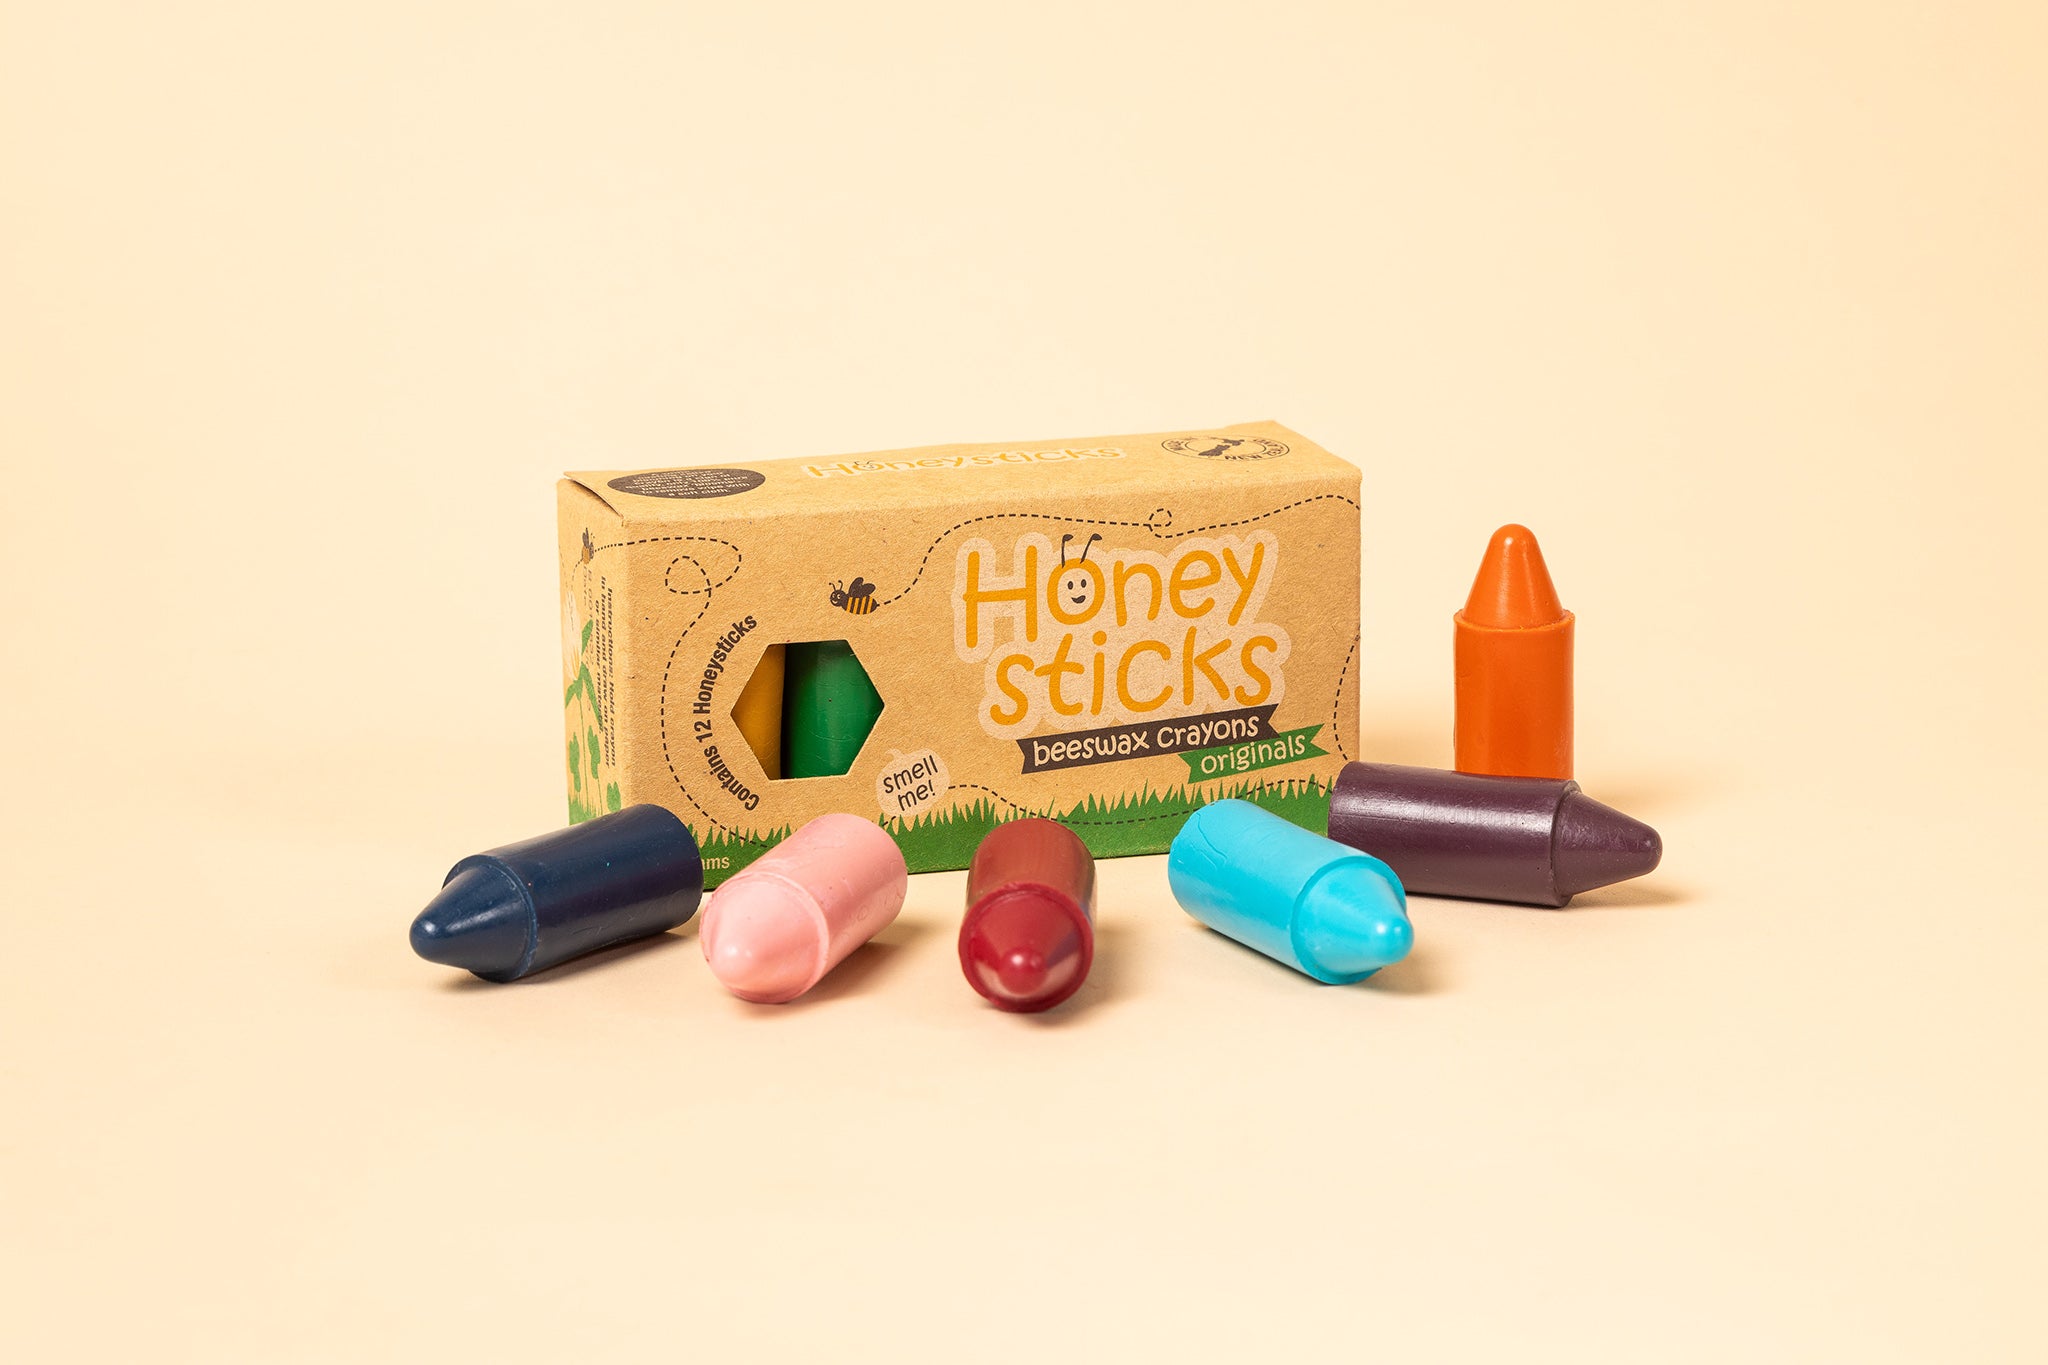 Honeysticks Beeswax Crayons 12 Pack - Originals